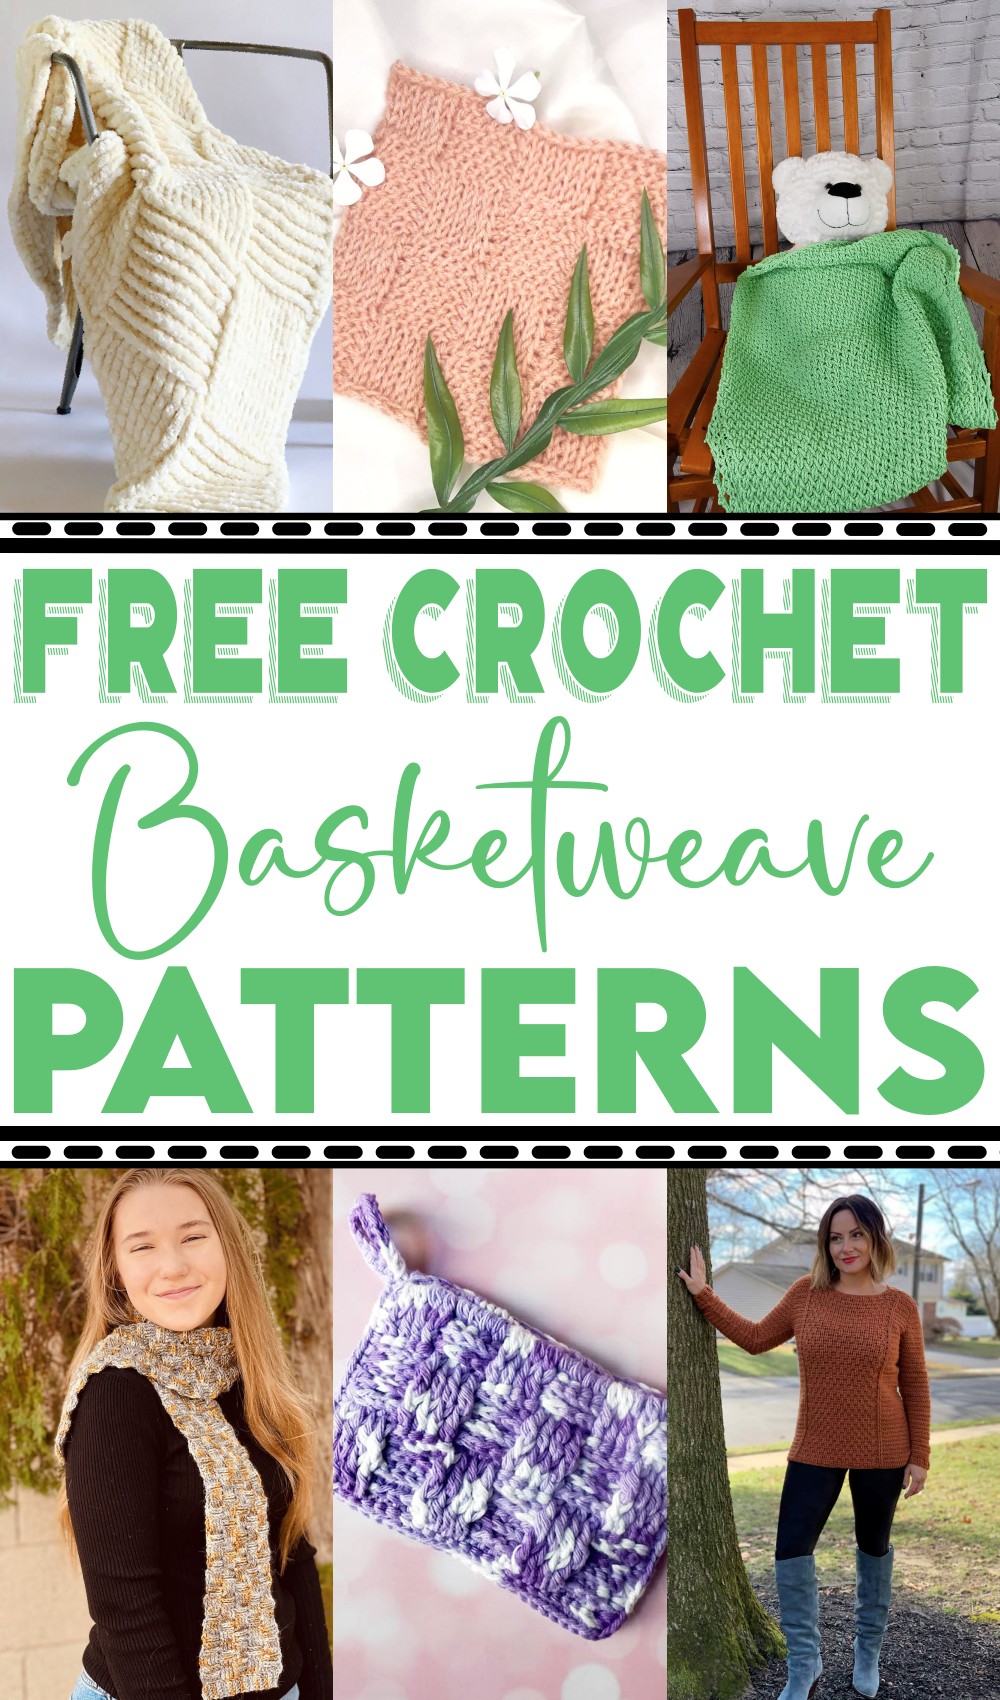 Free Crochet Basketweave Patterns